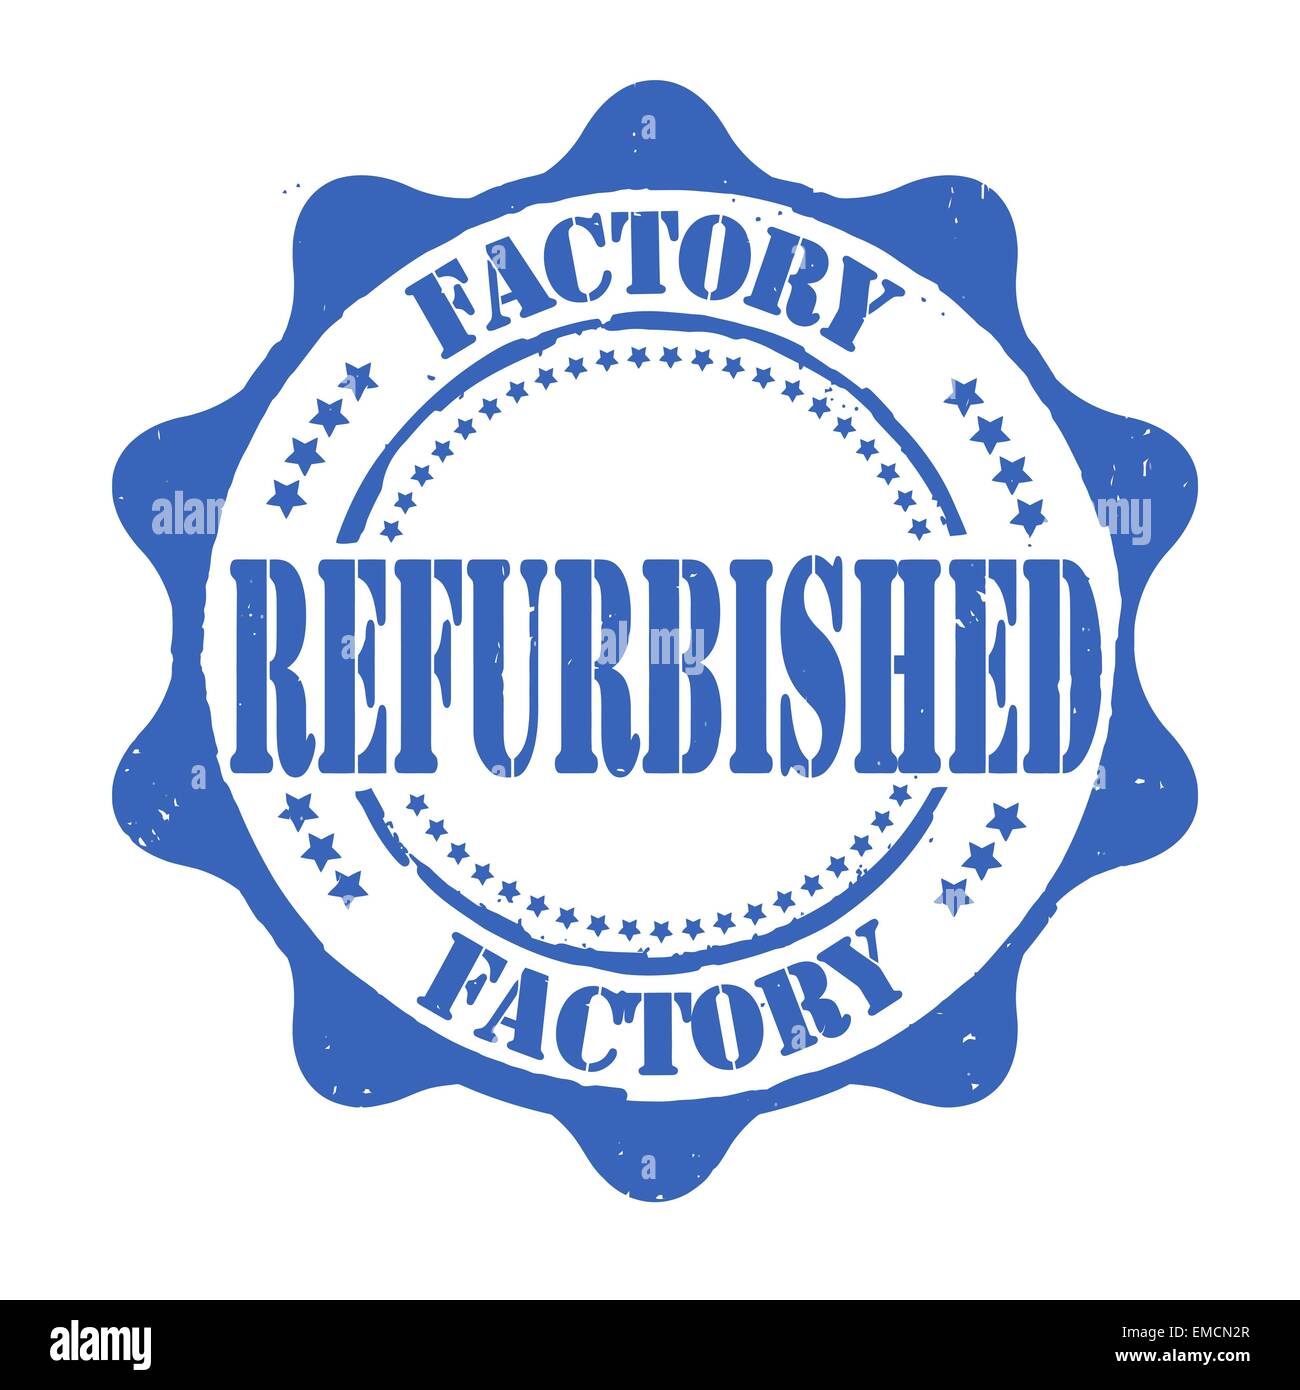 factory refurbished